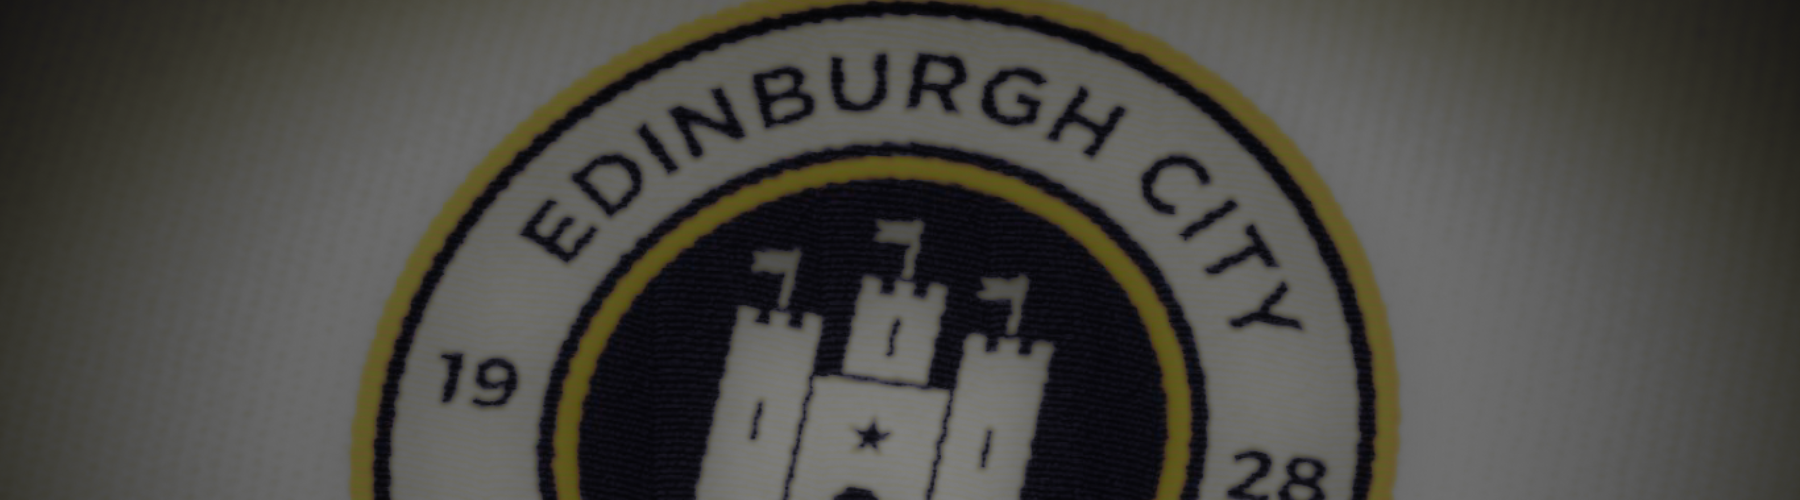 Edinburgh City FC Club Portal